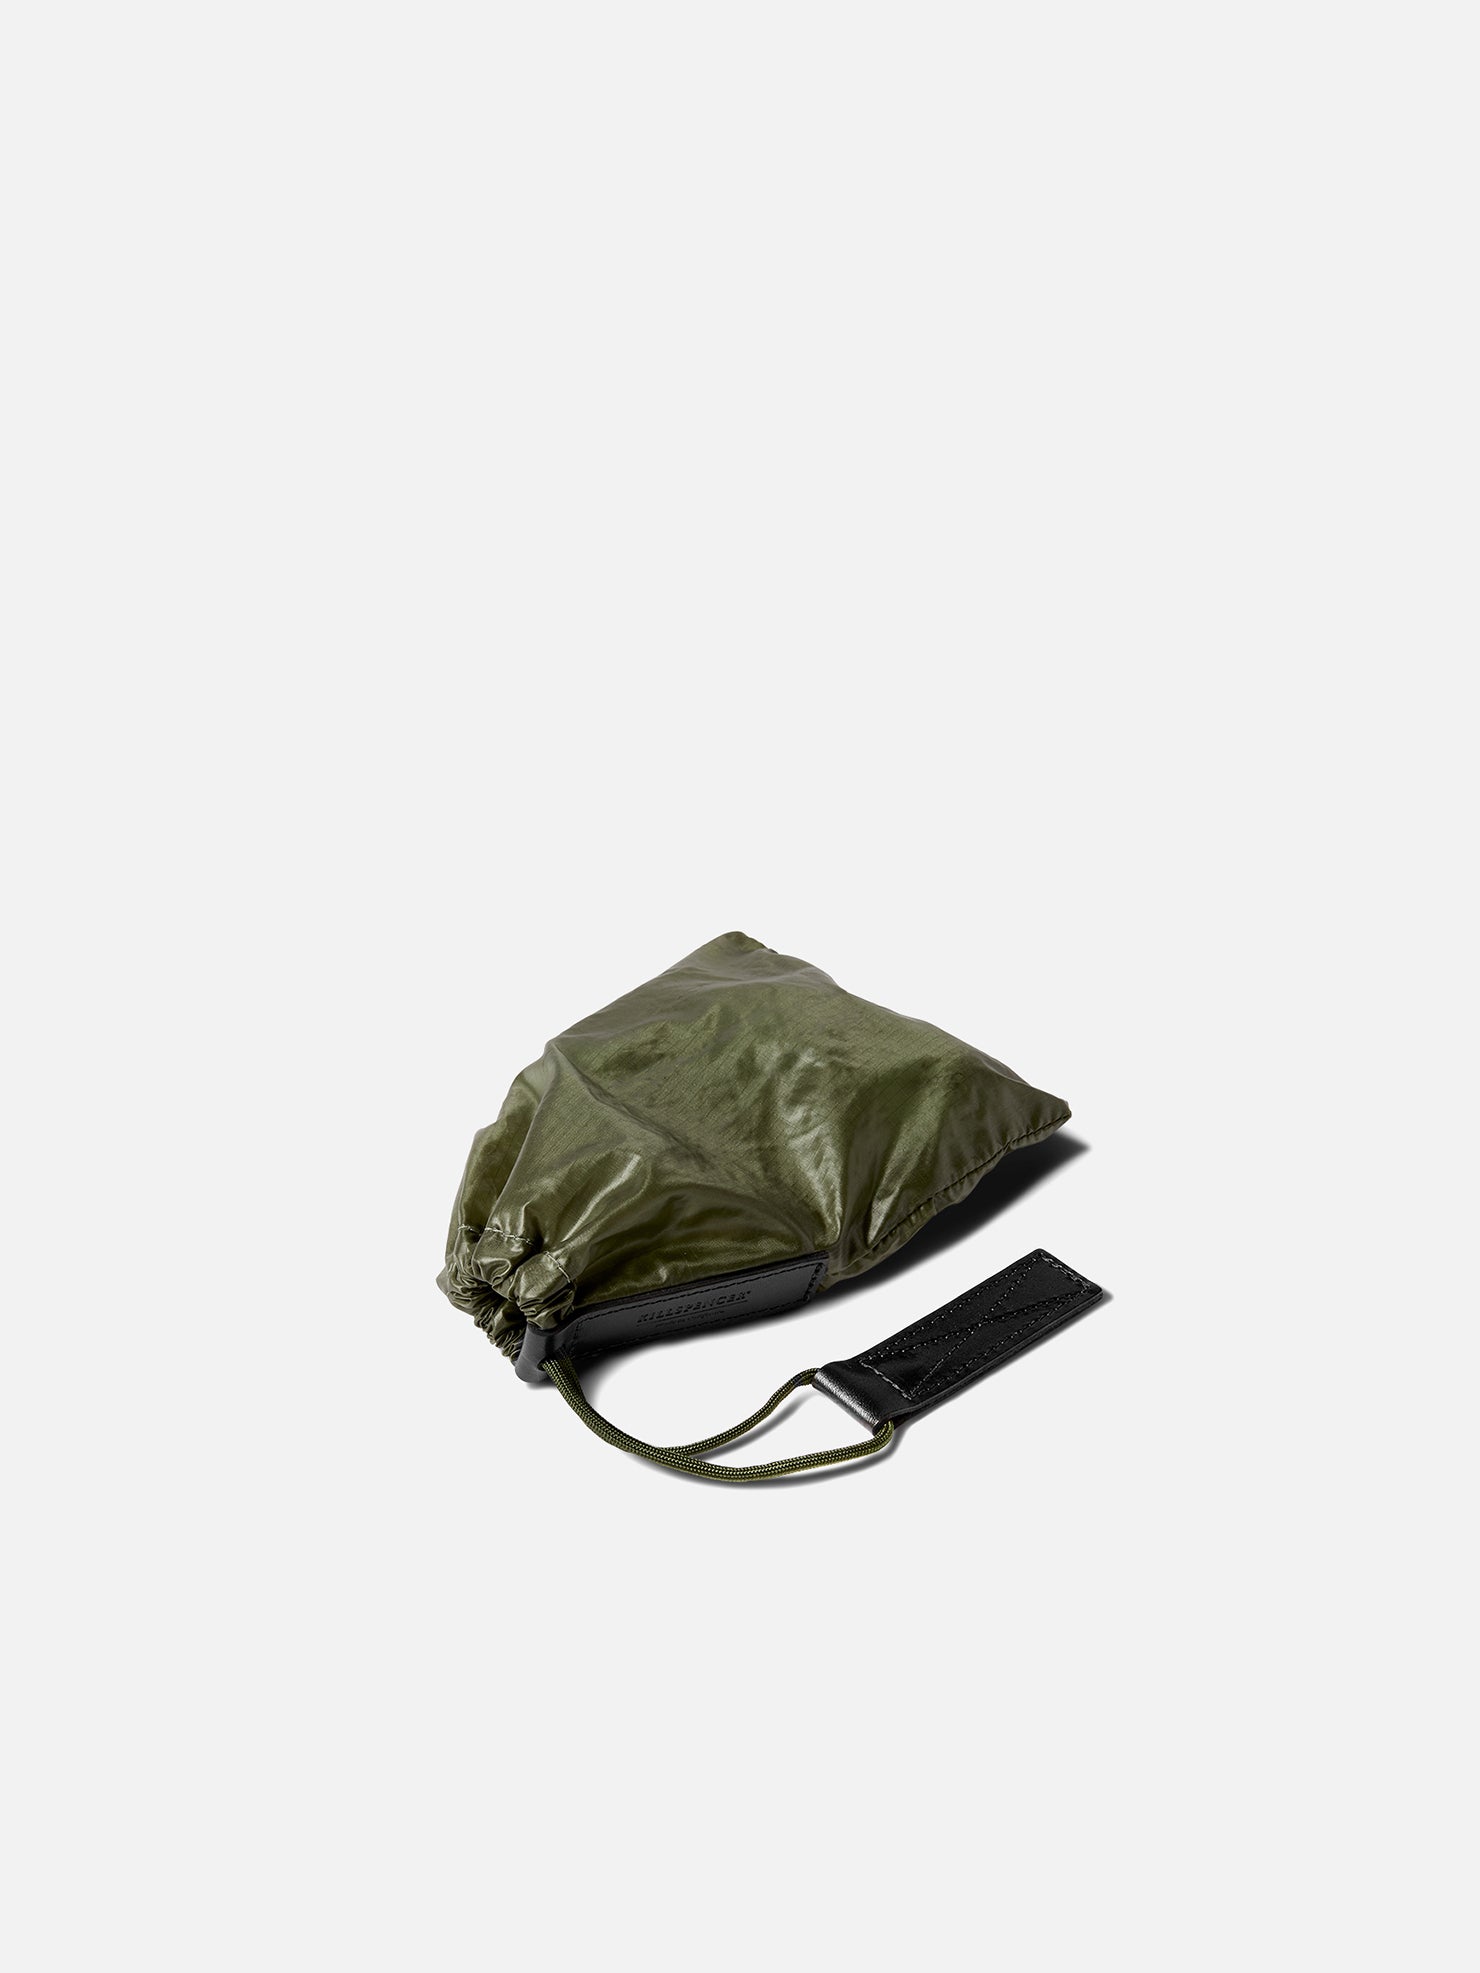 PARACHUTE BAG 2.0 - Small Accessory Bag | KILLSPENCER® - Olive Drab Parachute 